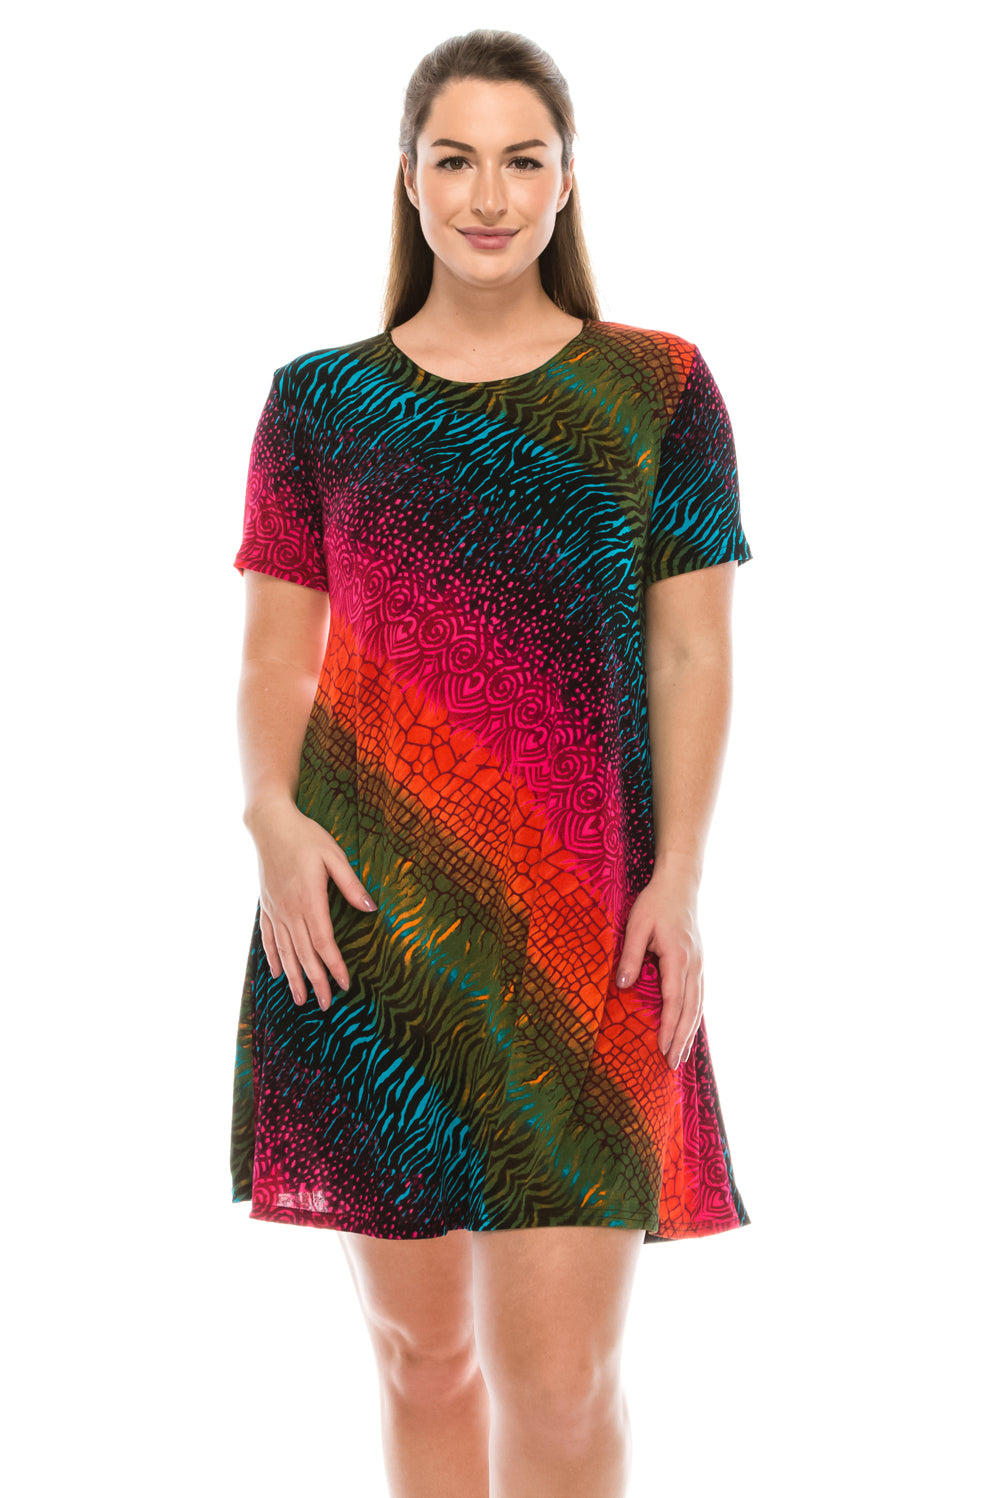 Jostar Women's Stretchy Missy Dress Short Sleeve Print, 704BN-SP-W182 - Jostar Online